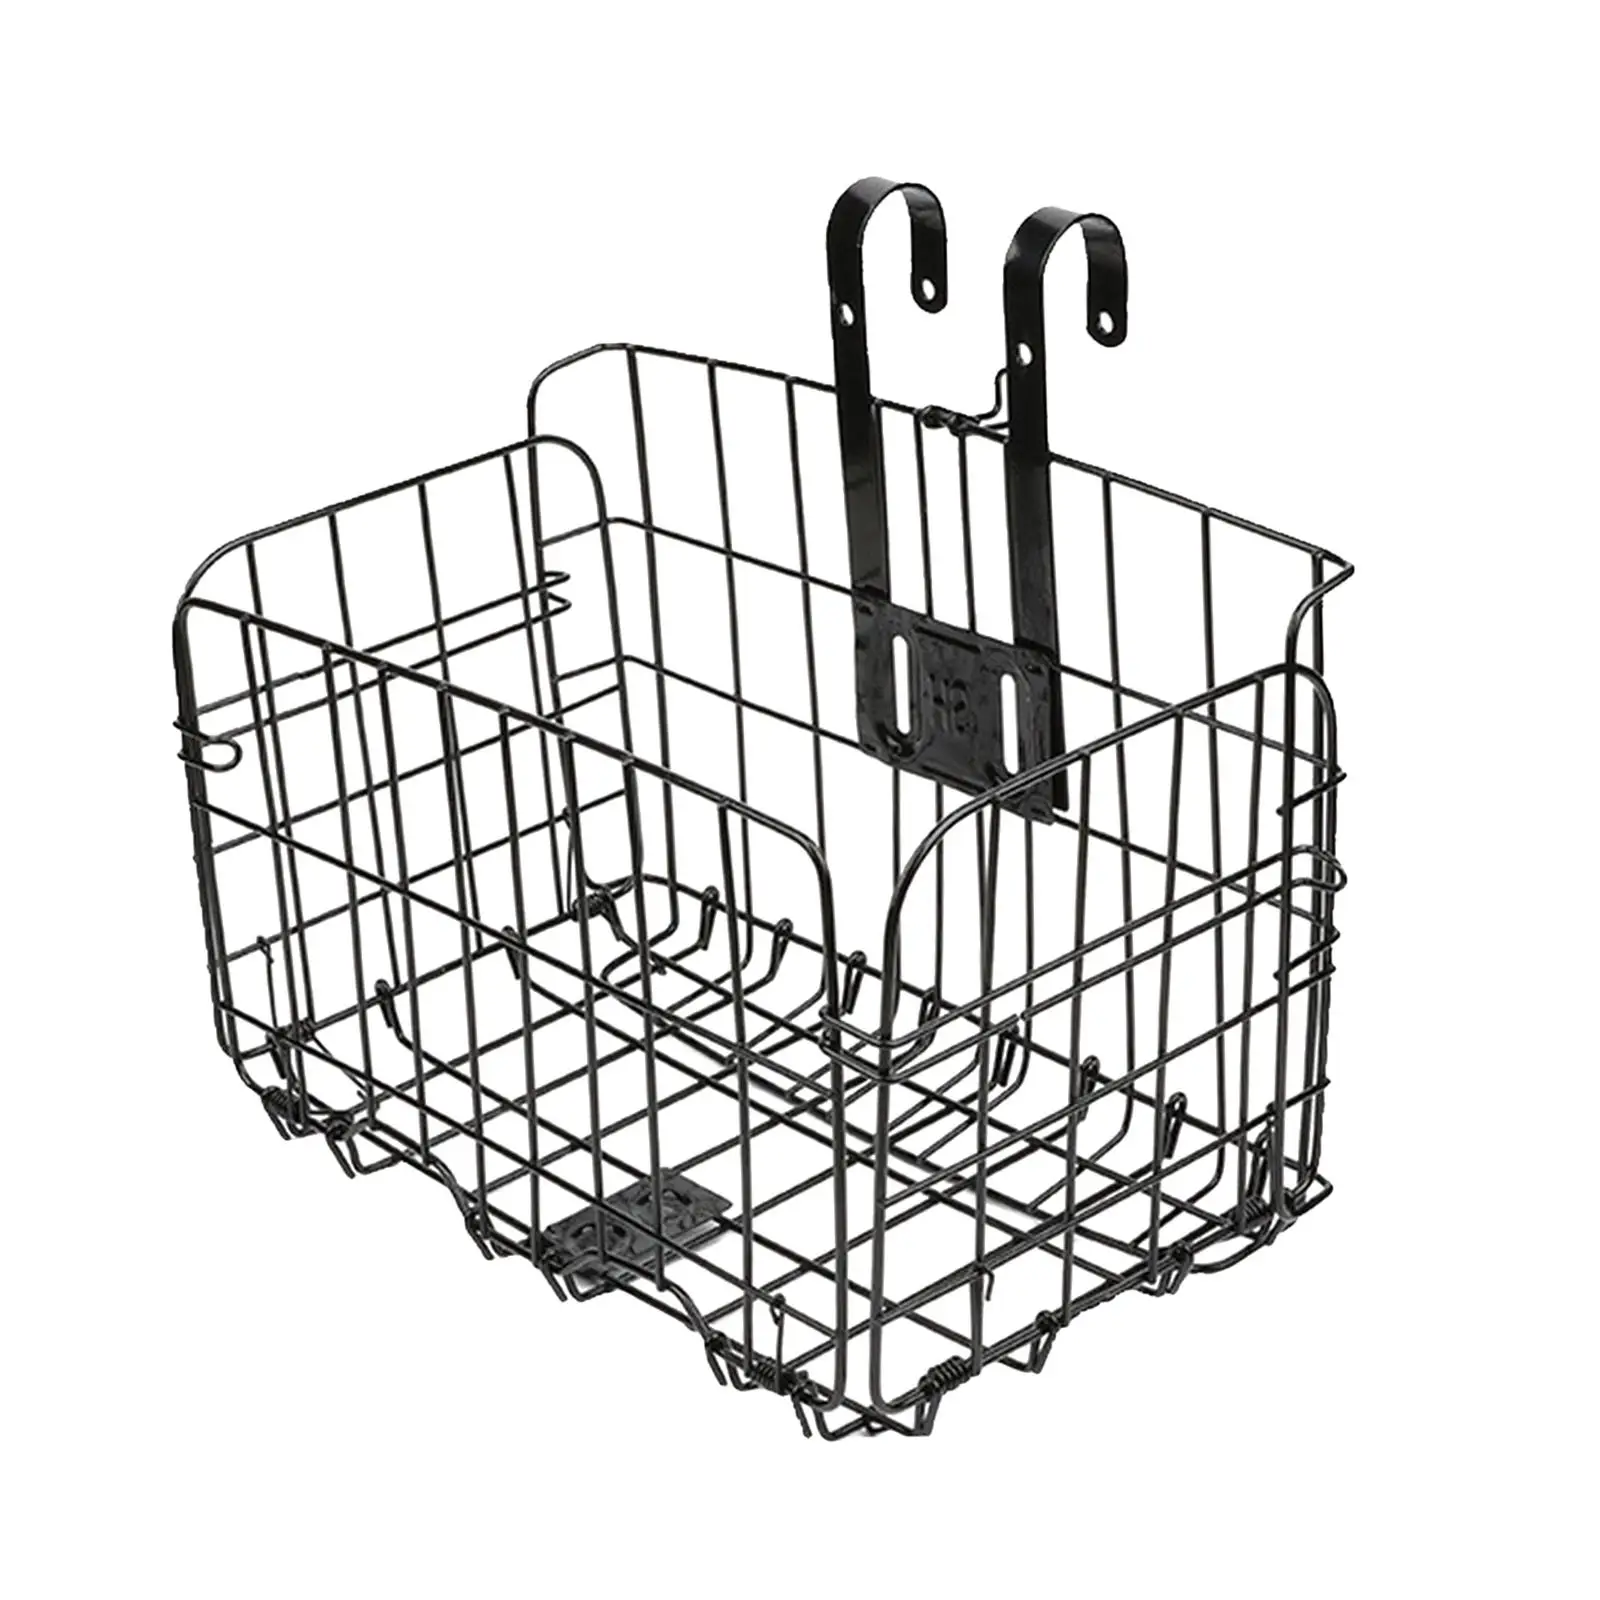 Bike Basket Durable Holder Organizer Container Bicycle Storage Basket for